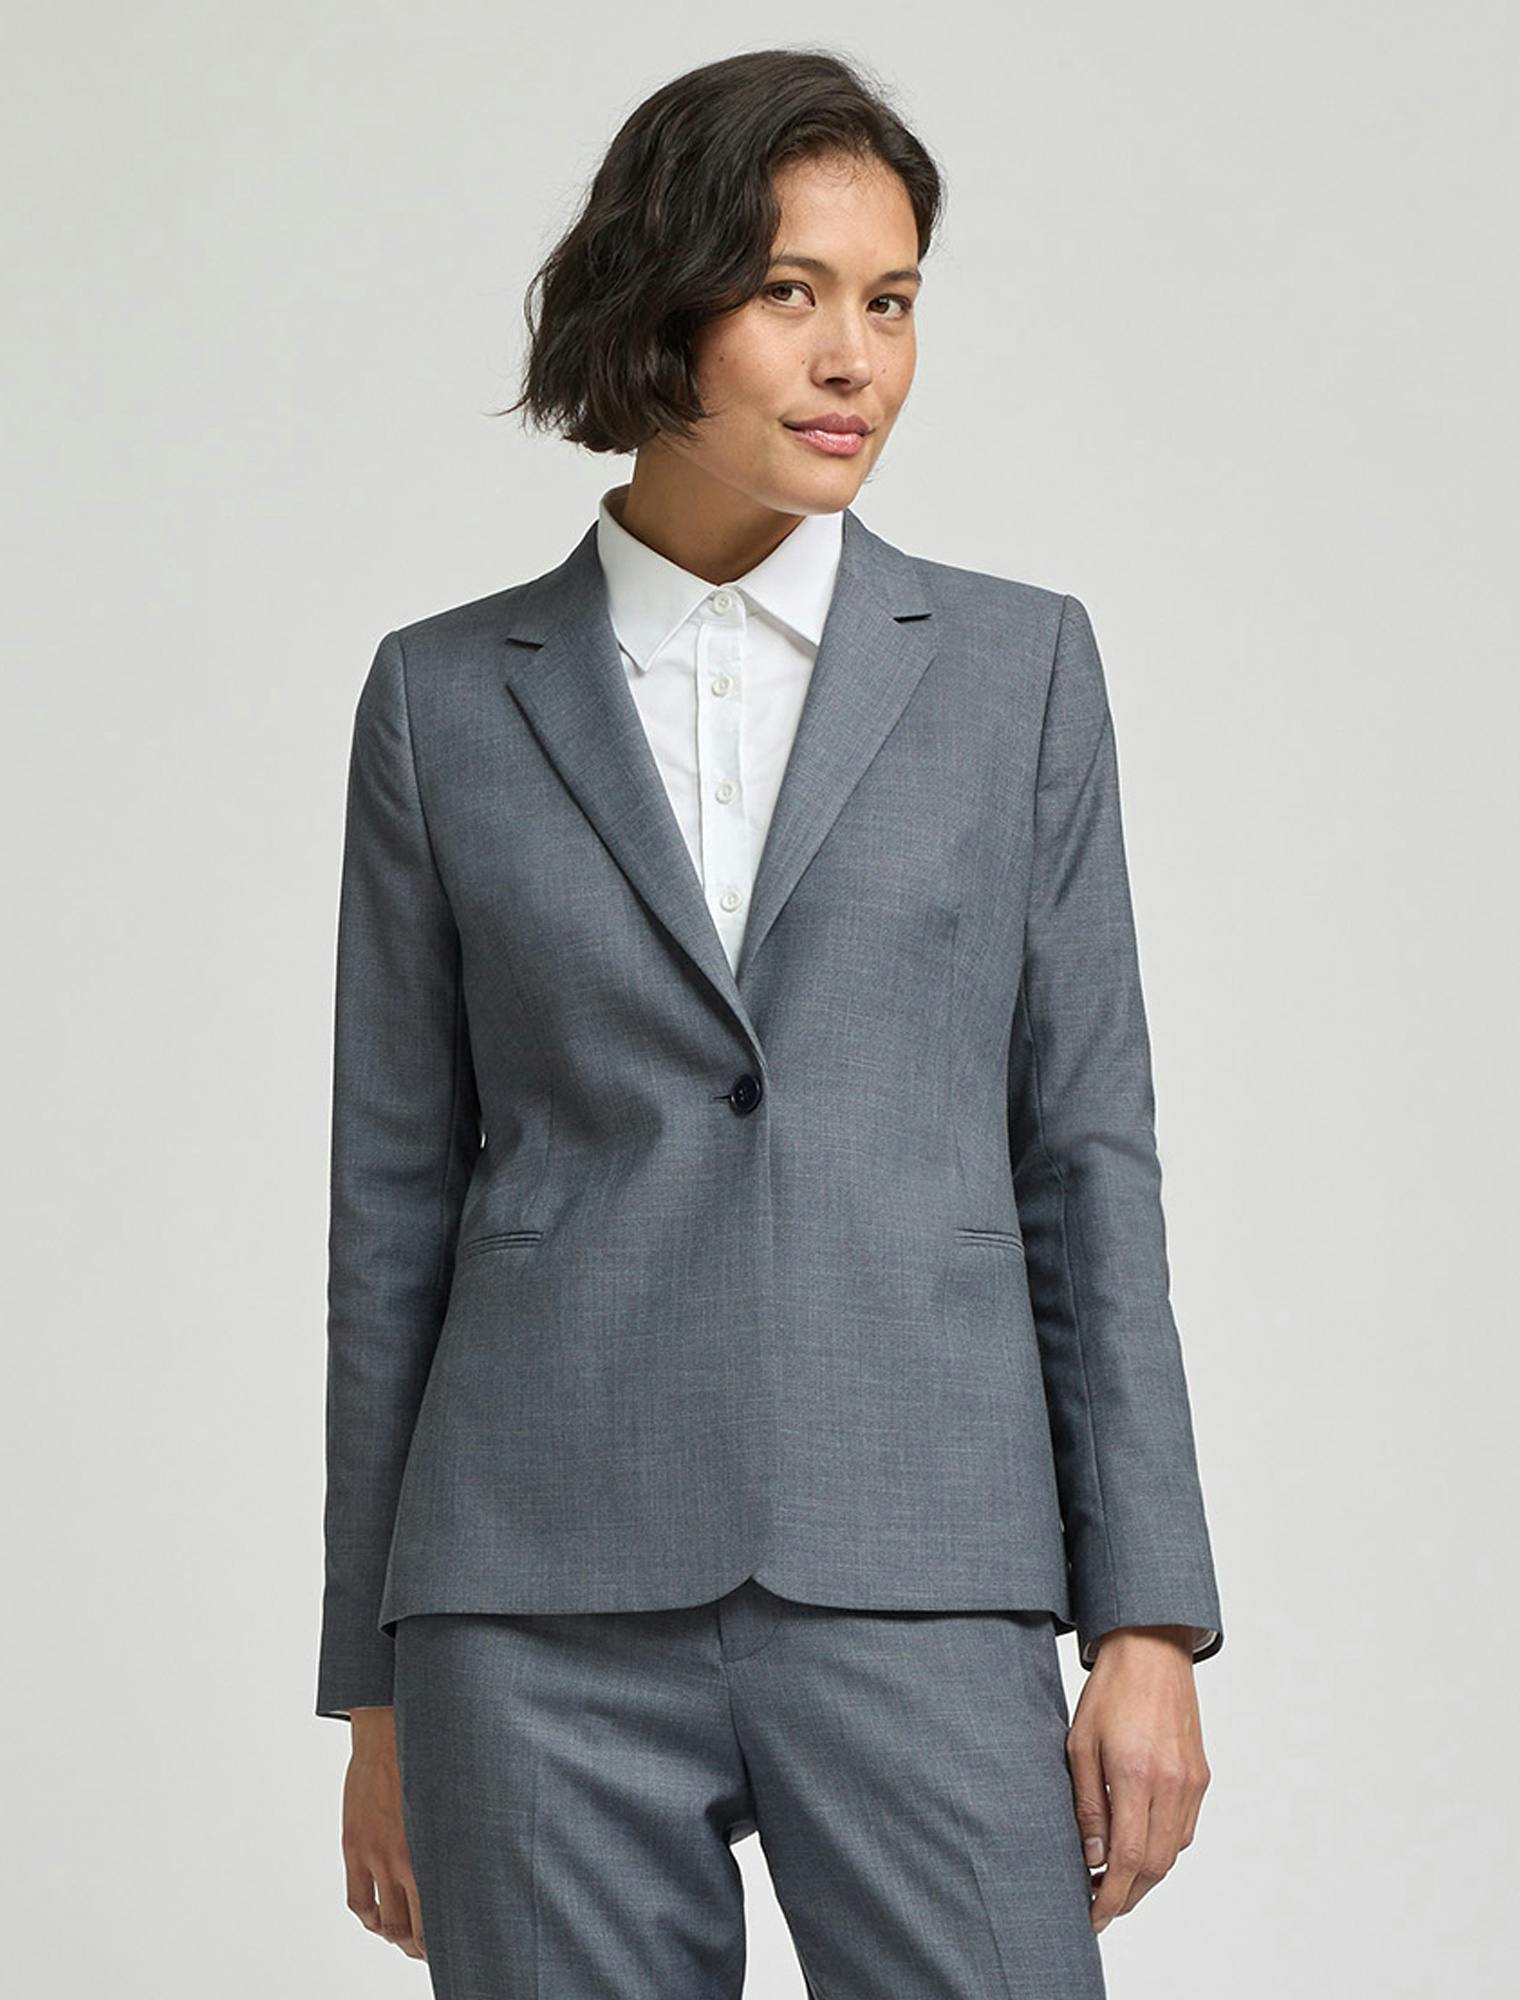 Saville Women's Blazer - Bluegrain Grey Suit Jacket